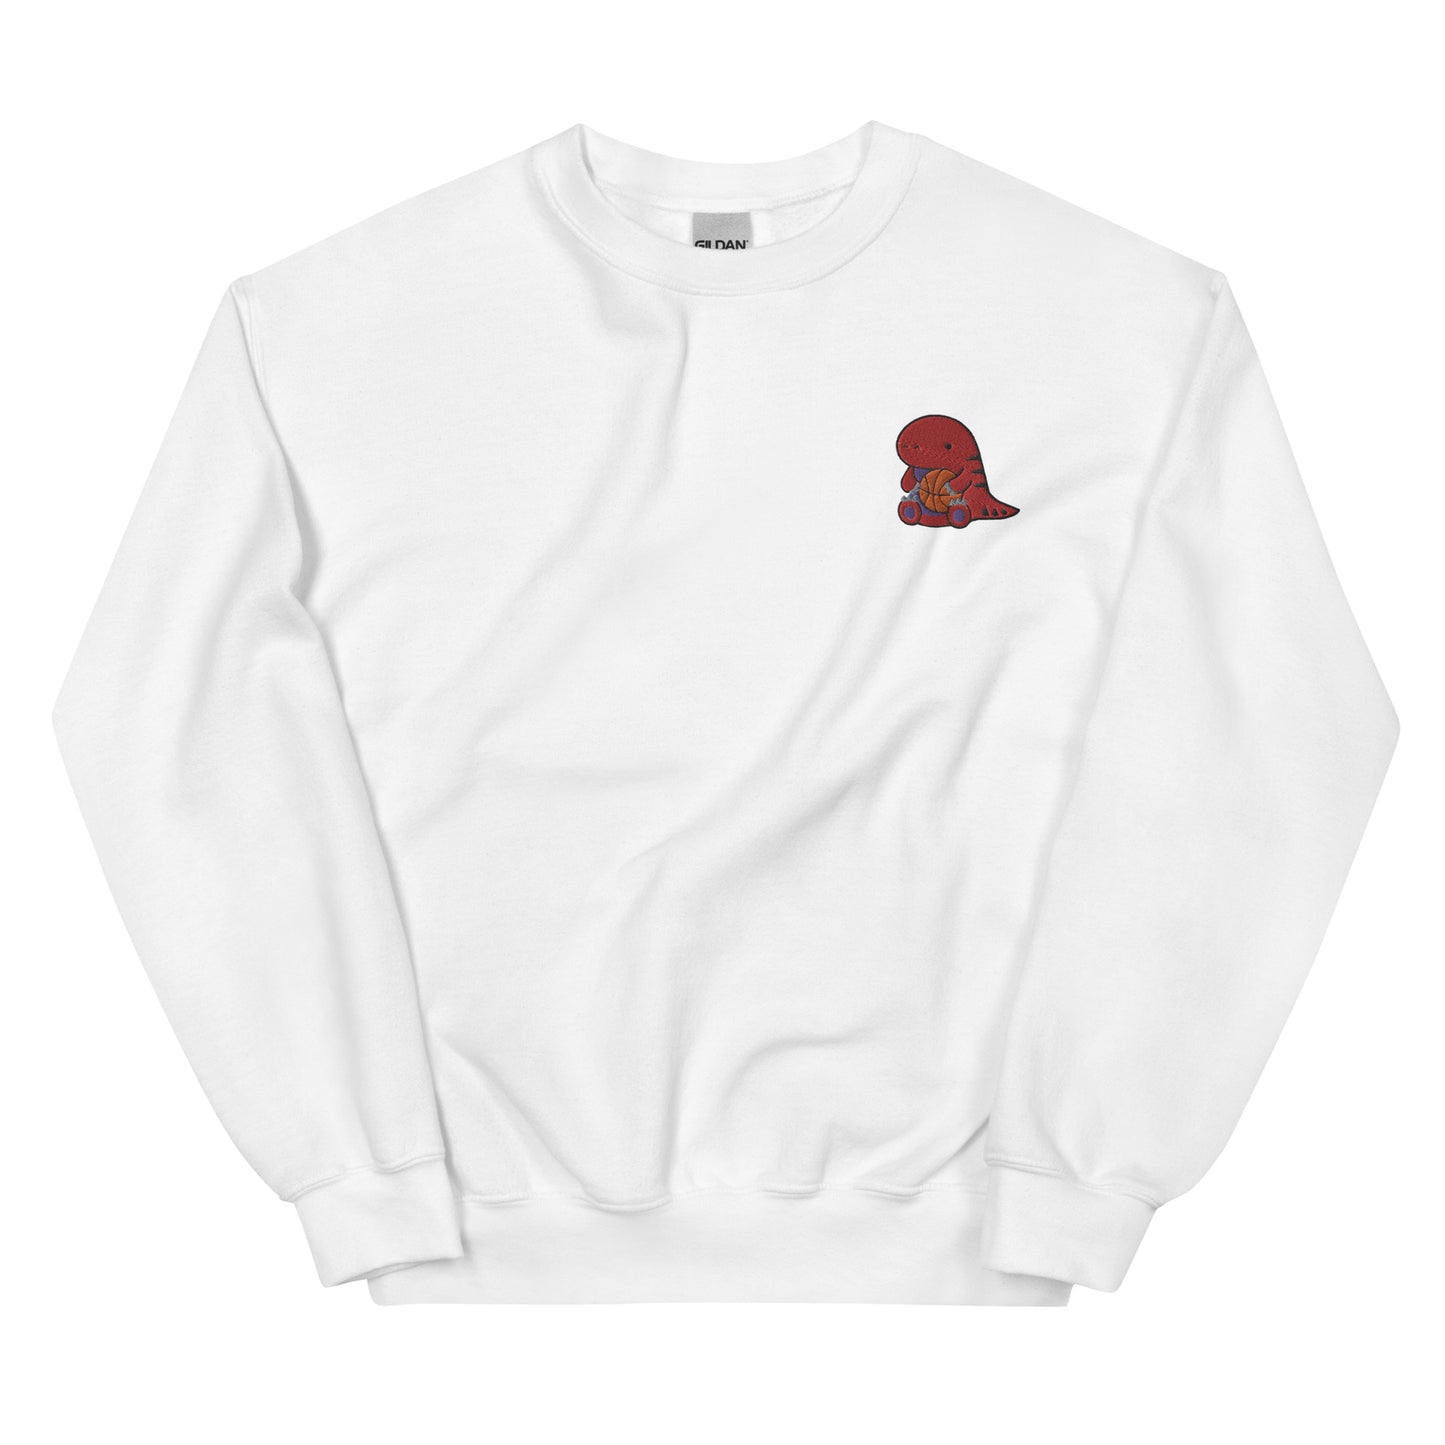 Embroidered Raptor Sweatshirt - Toronto Basketball Apparel